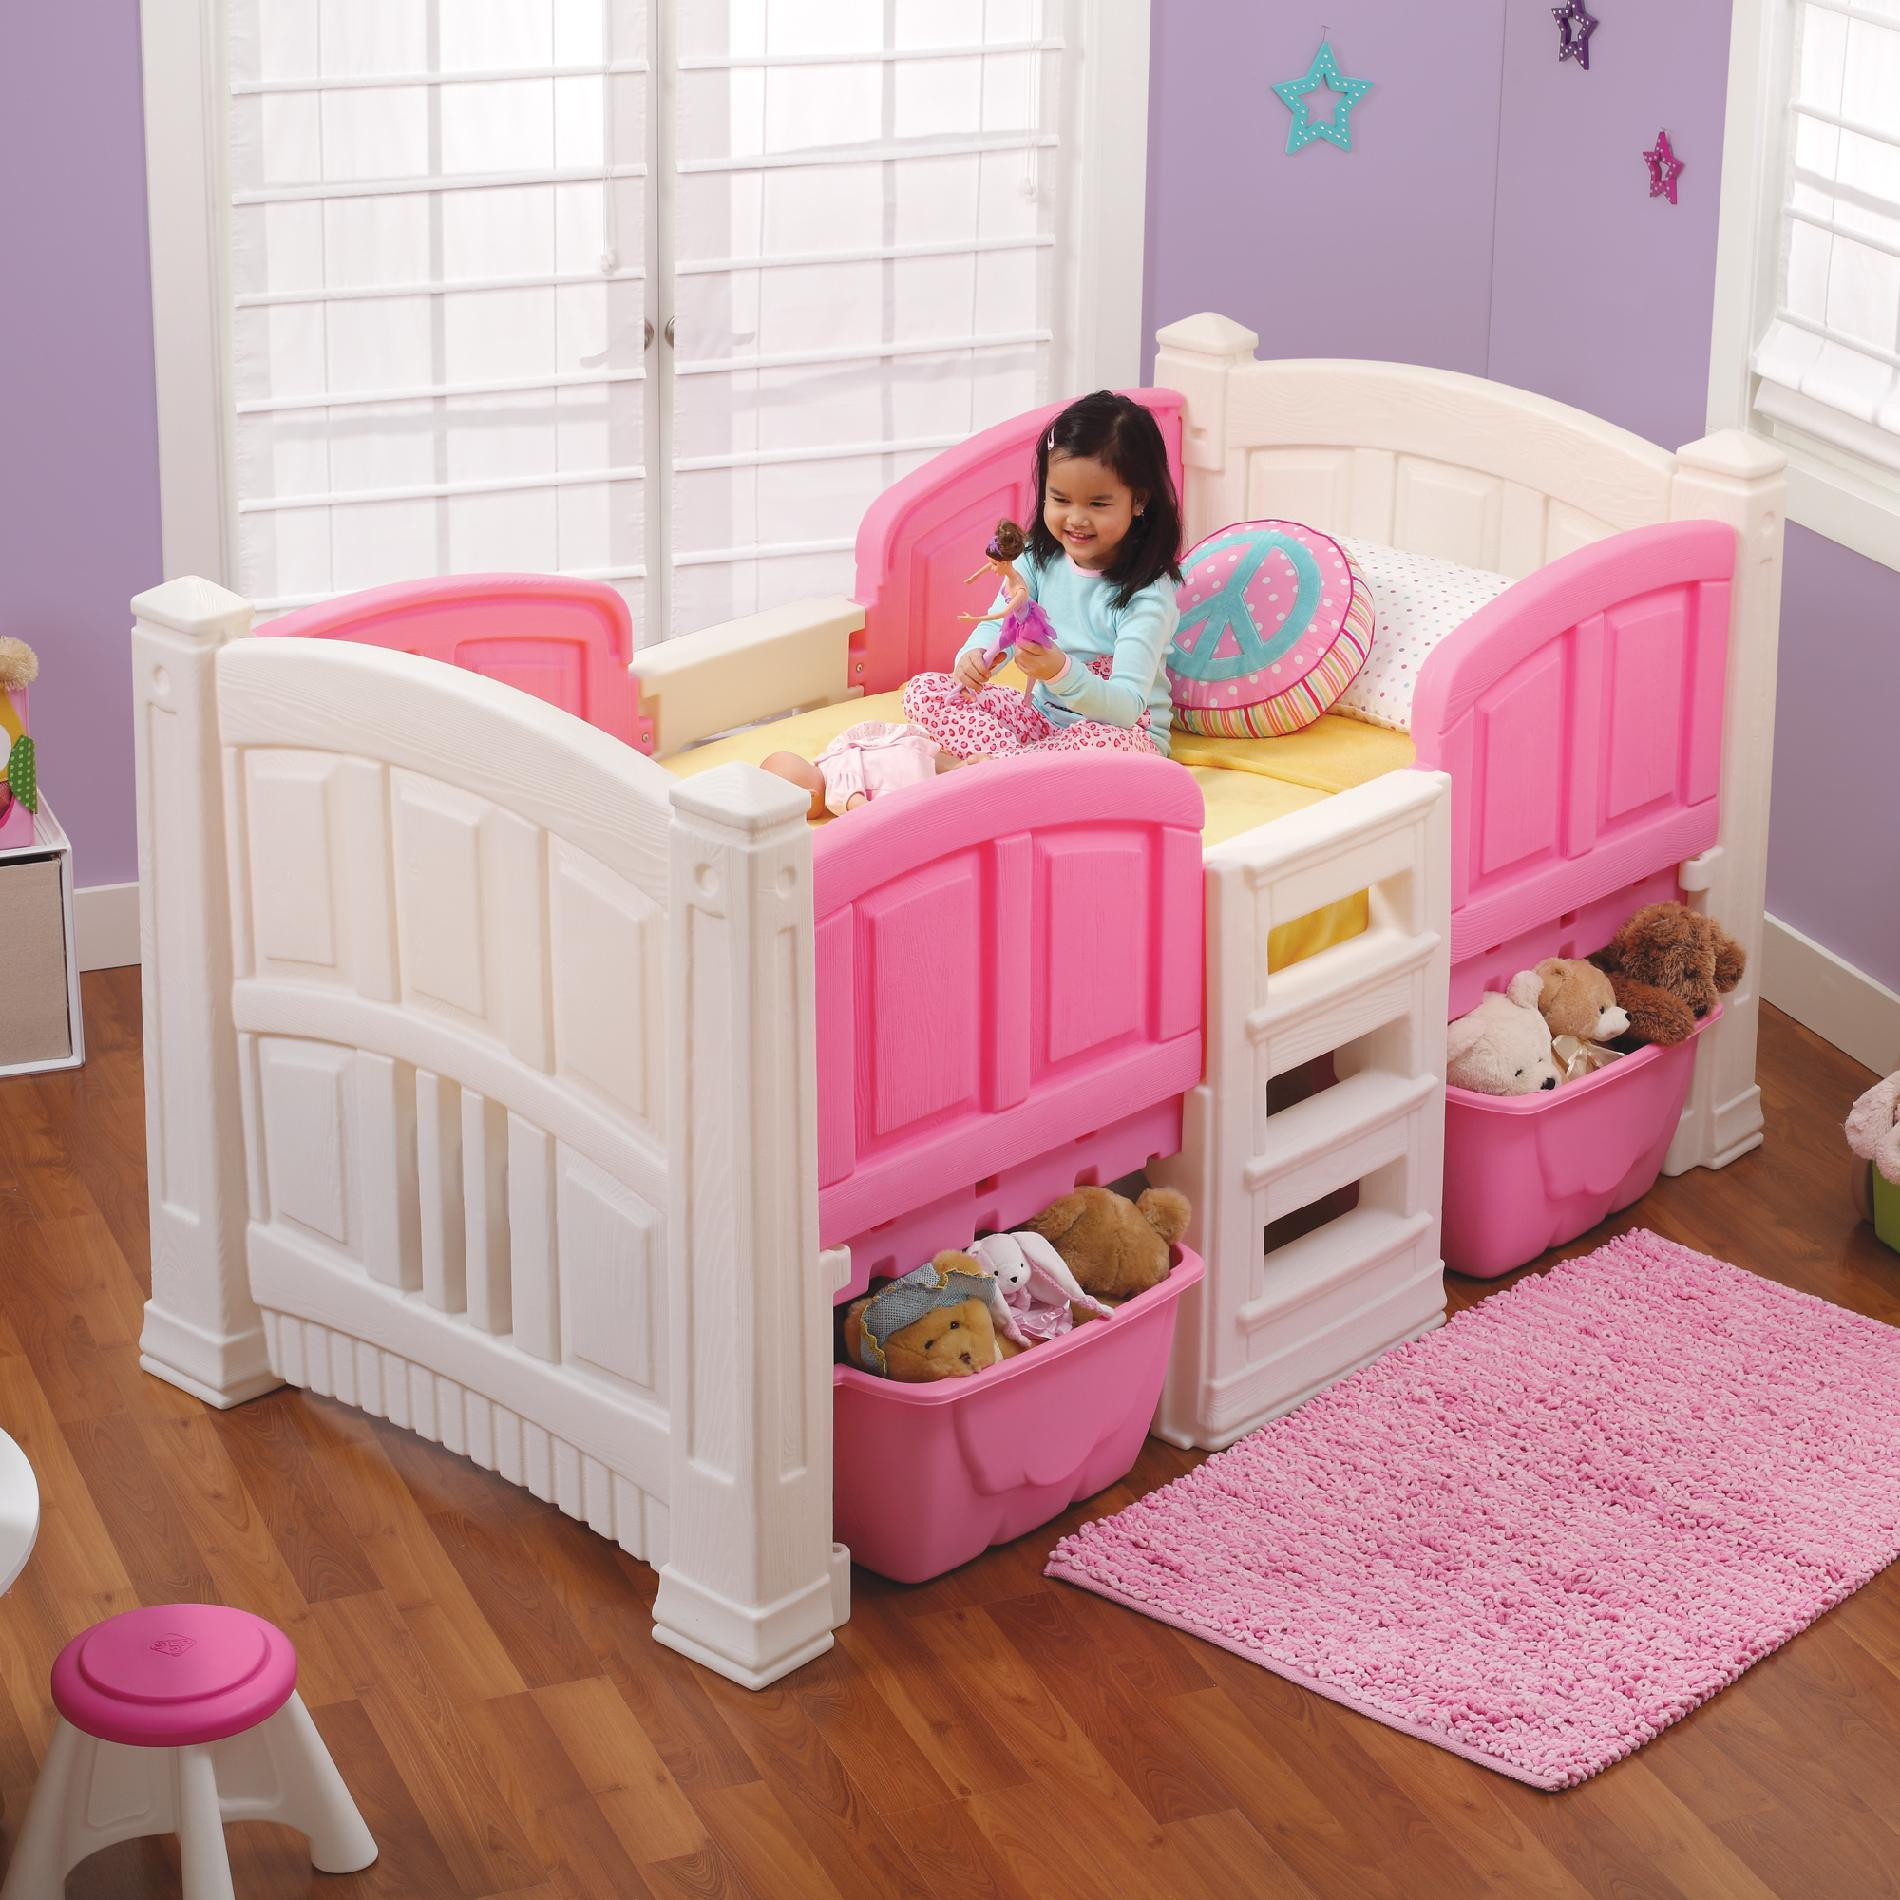 Toddler Girl Bedroom Furniture
 Step 2 Girl s Loft & Storage Twin Bed Baby Toddler